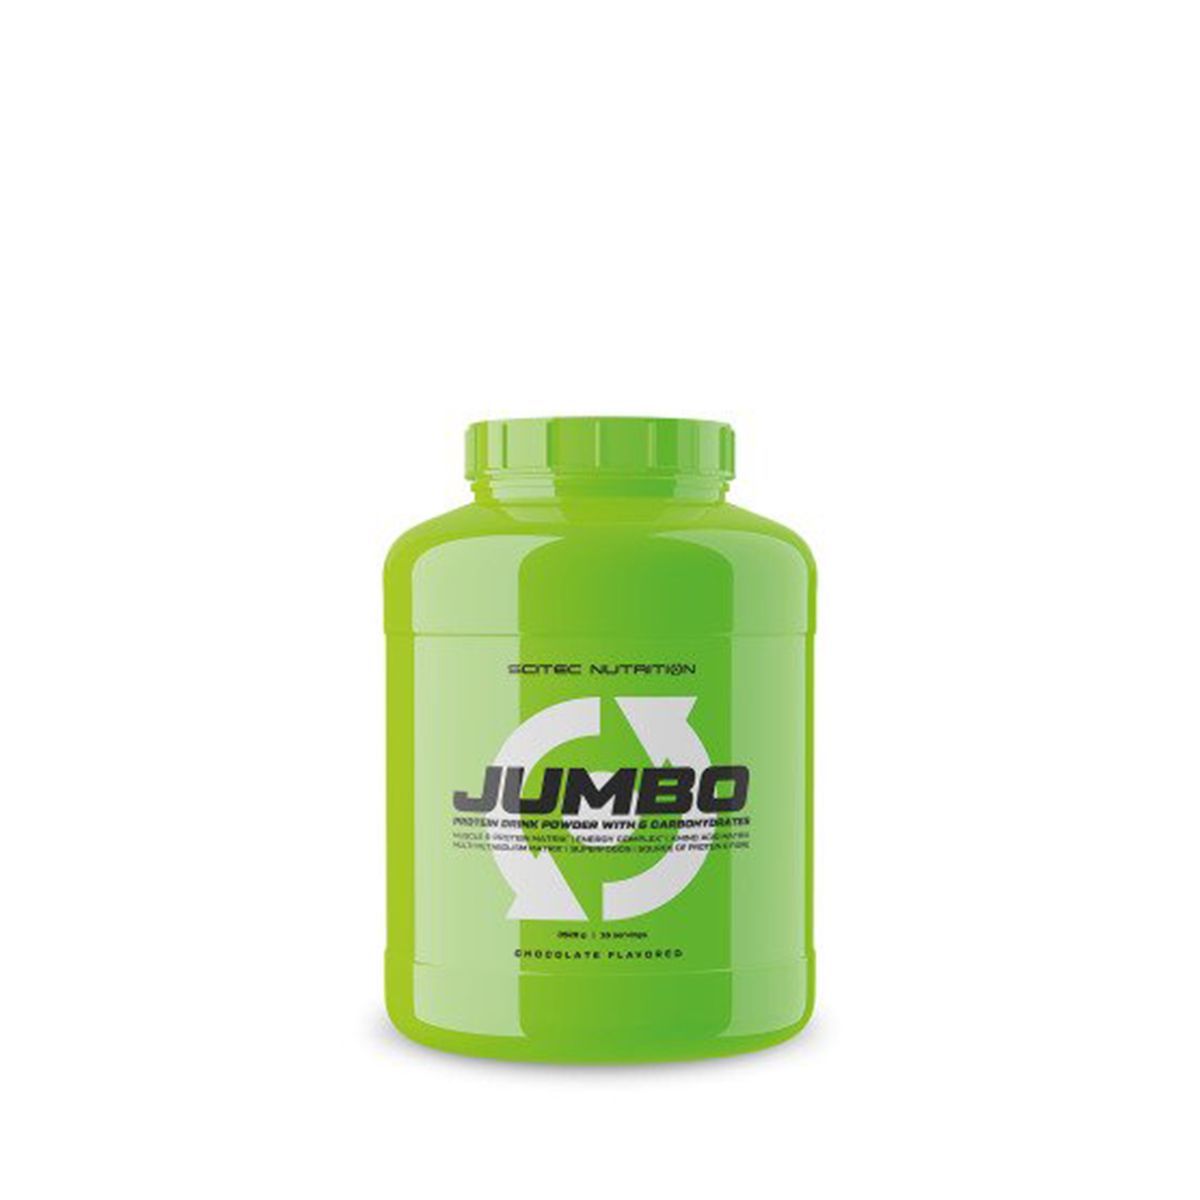 Scitec Nutrition - Jumbo! - 3,52kg